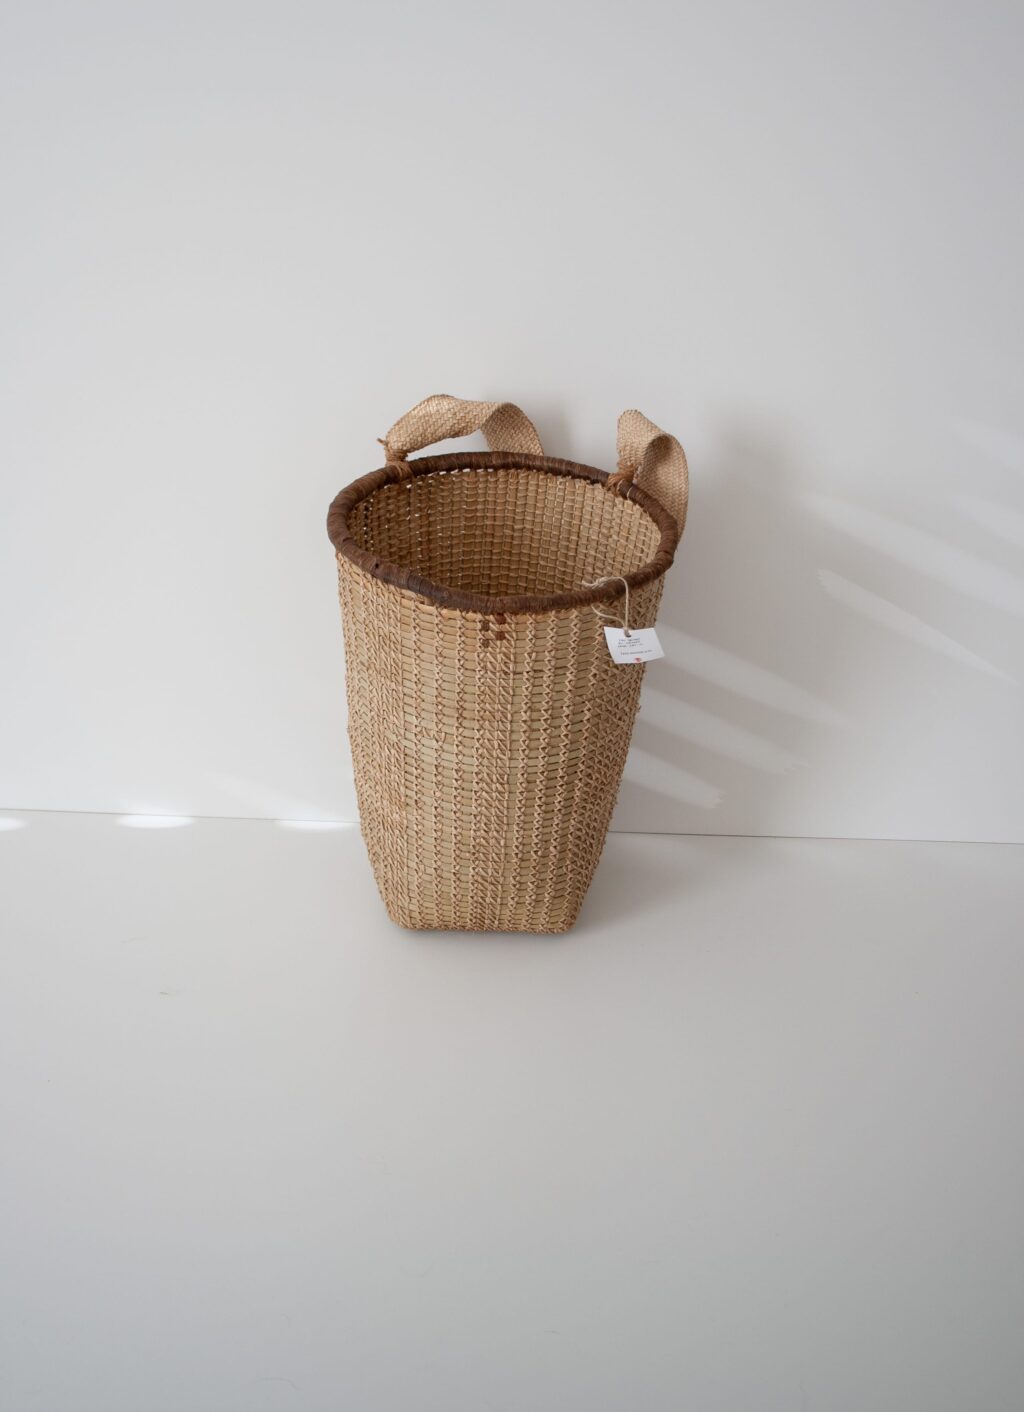 Incausa - Kax Basket by Kayapo People - M